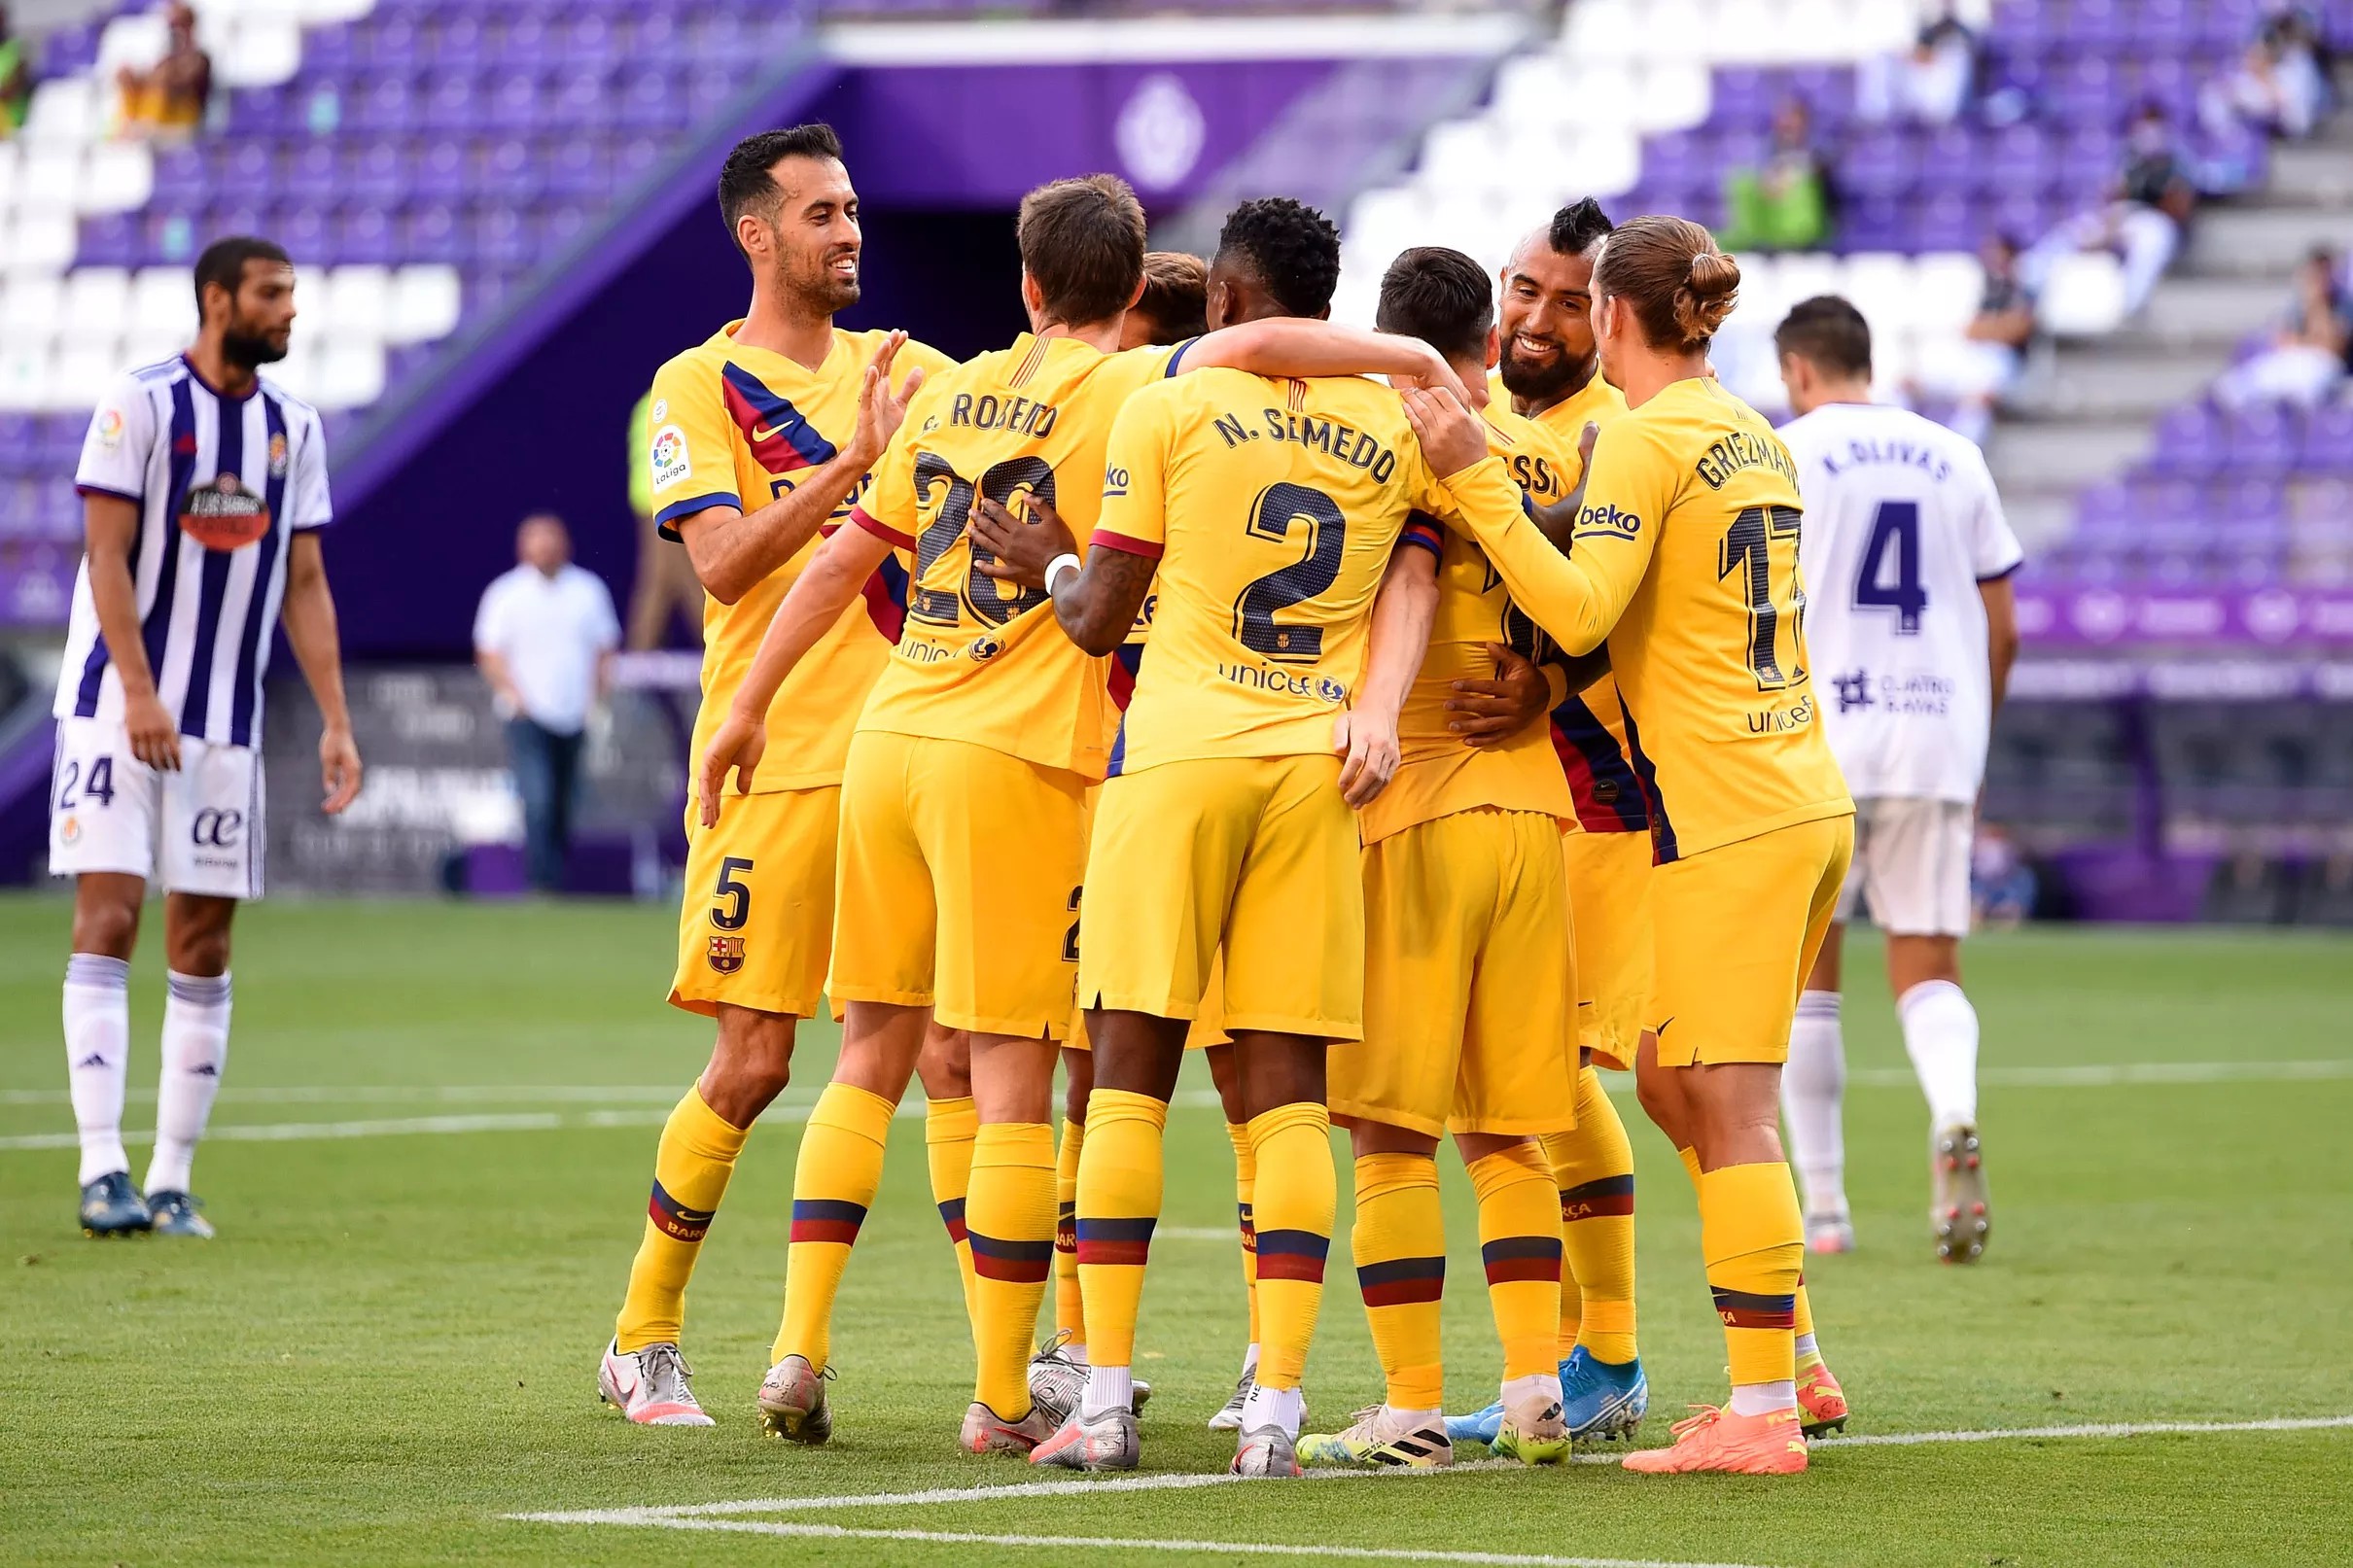 Real Valladolid vs Barcelona, La Liga: Final Score 0-1, Barça dominate